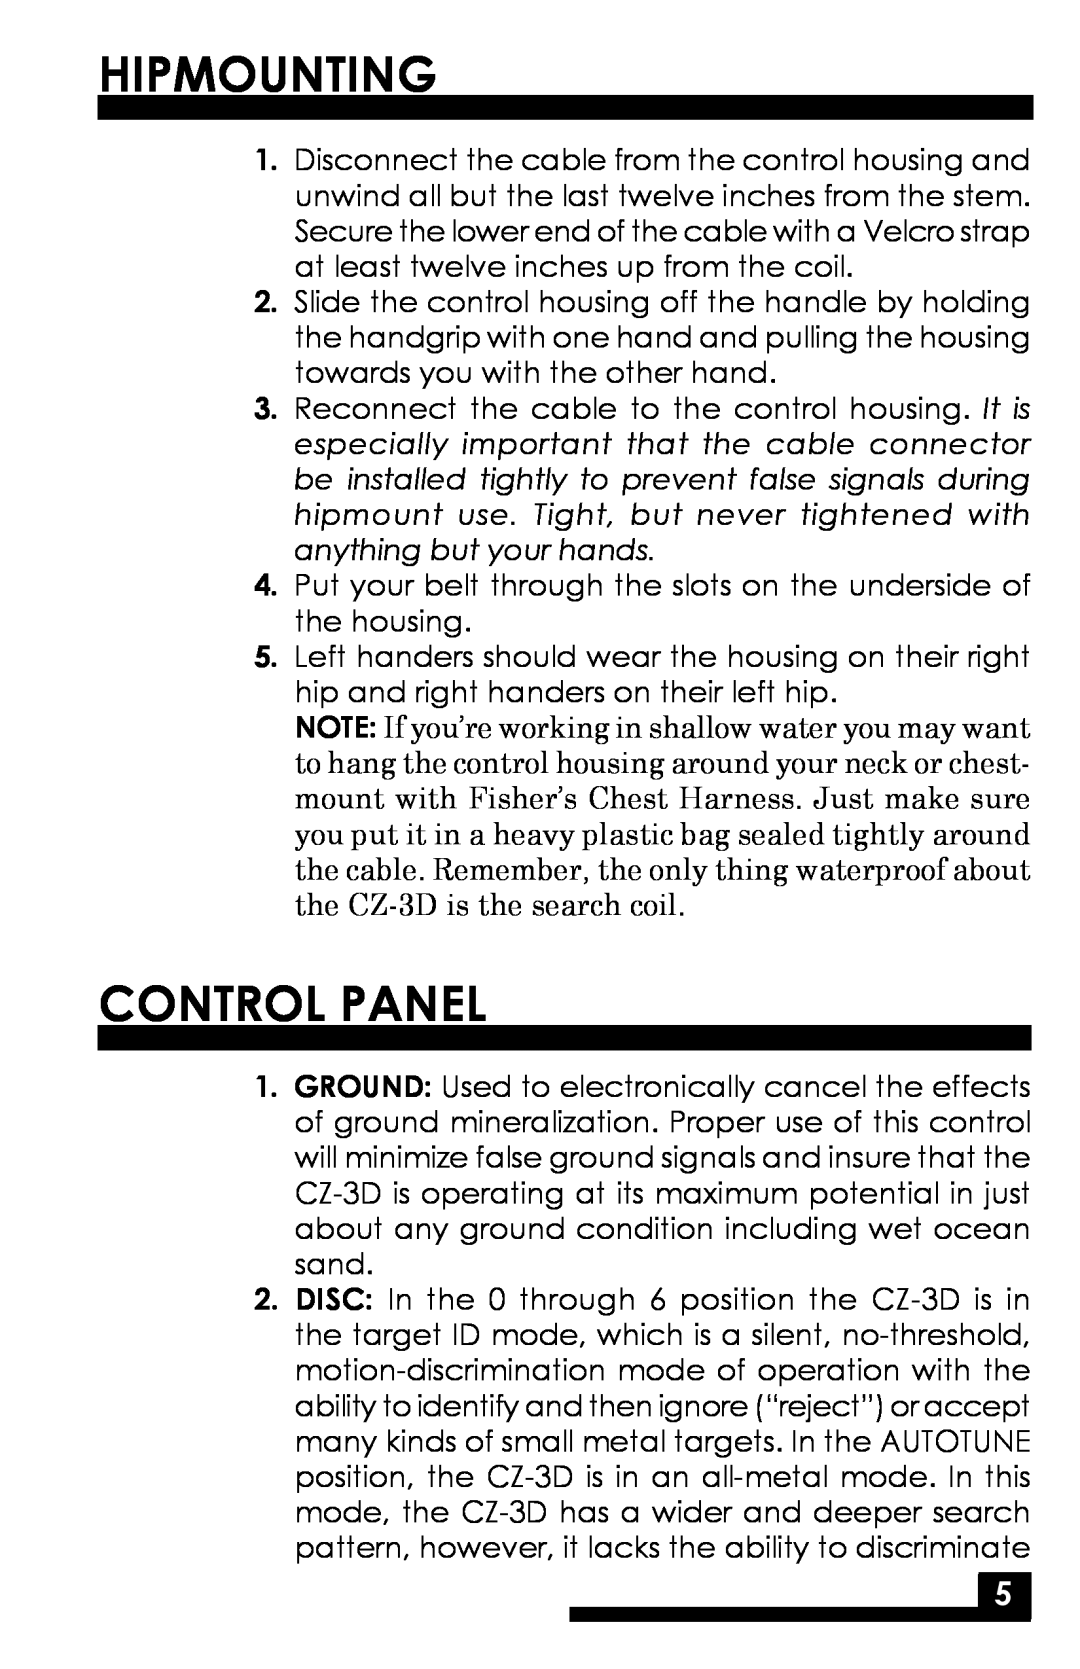 Fisher CZ-3D manual Hipmounting, Control Panel 